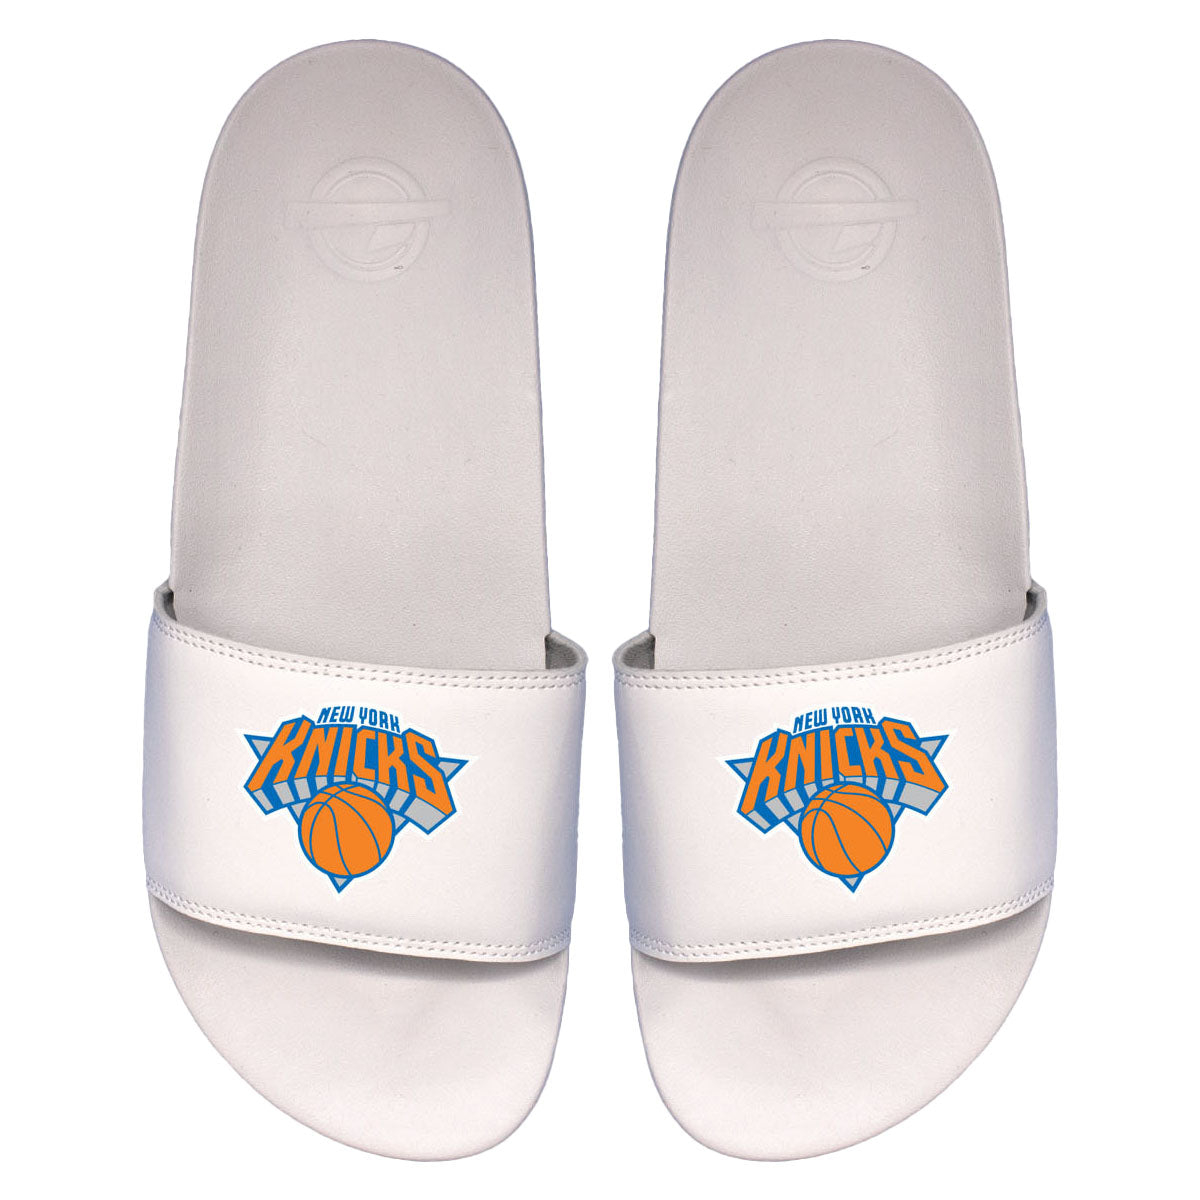 Knicks Primary Motto Slides